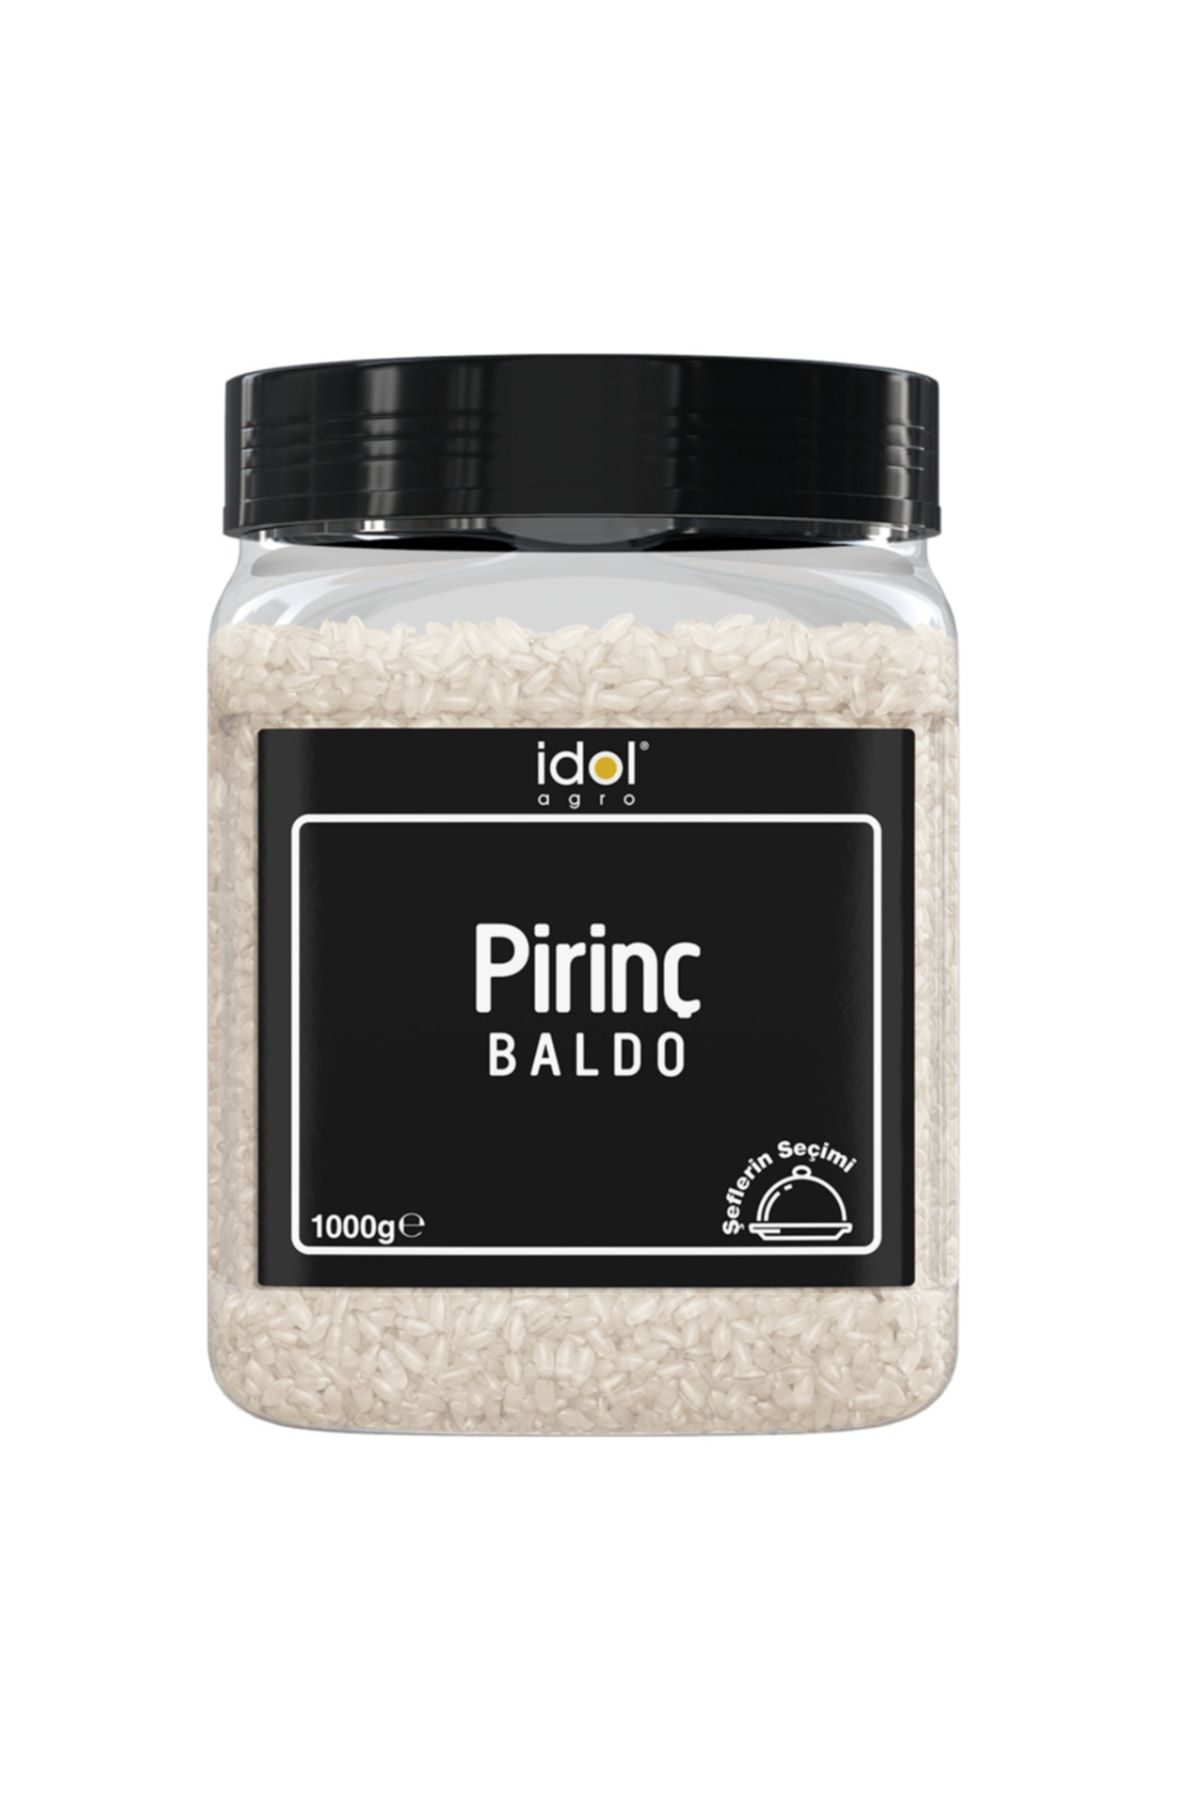 idolagro Baldo Pirinç - 1.sınıf - Tip A - Uzun Iri Tane - Premium Pet - 1000 Gr